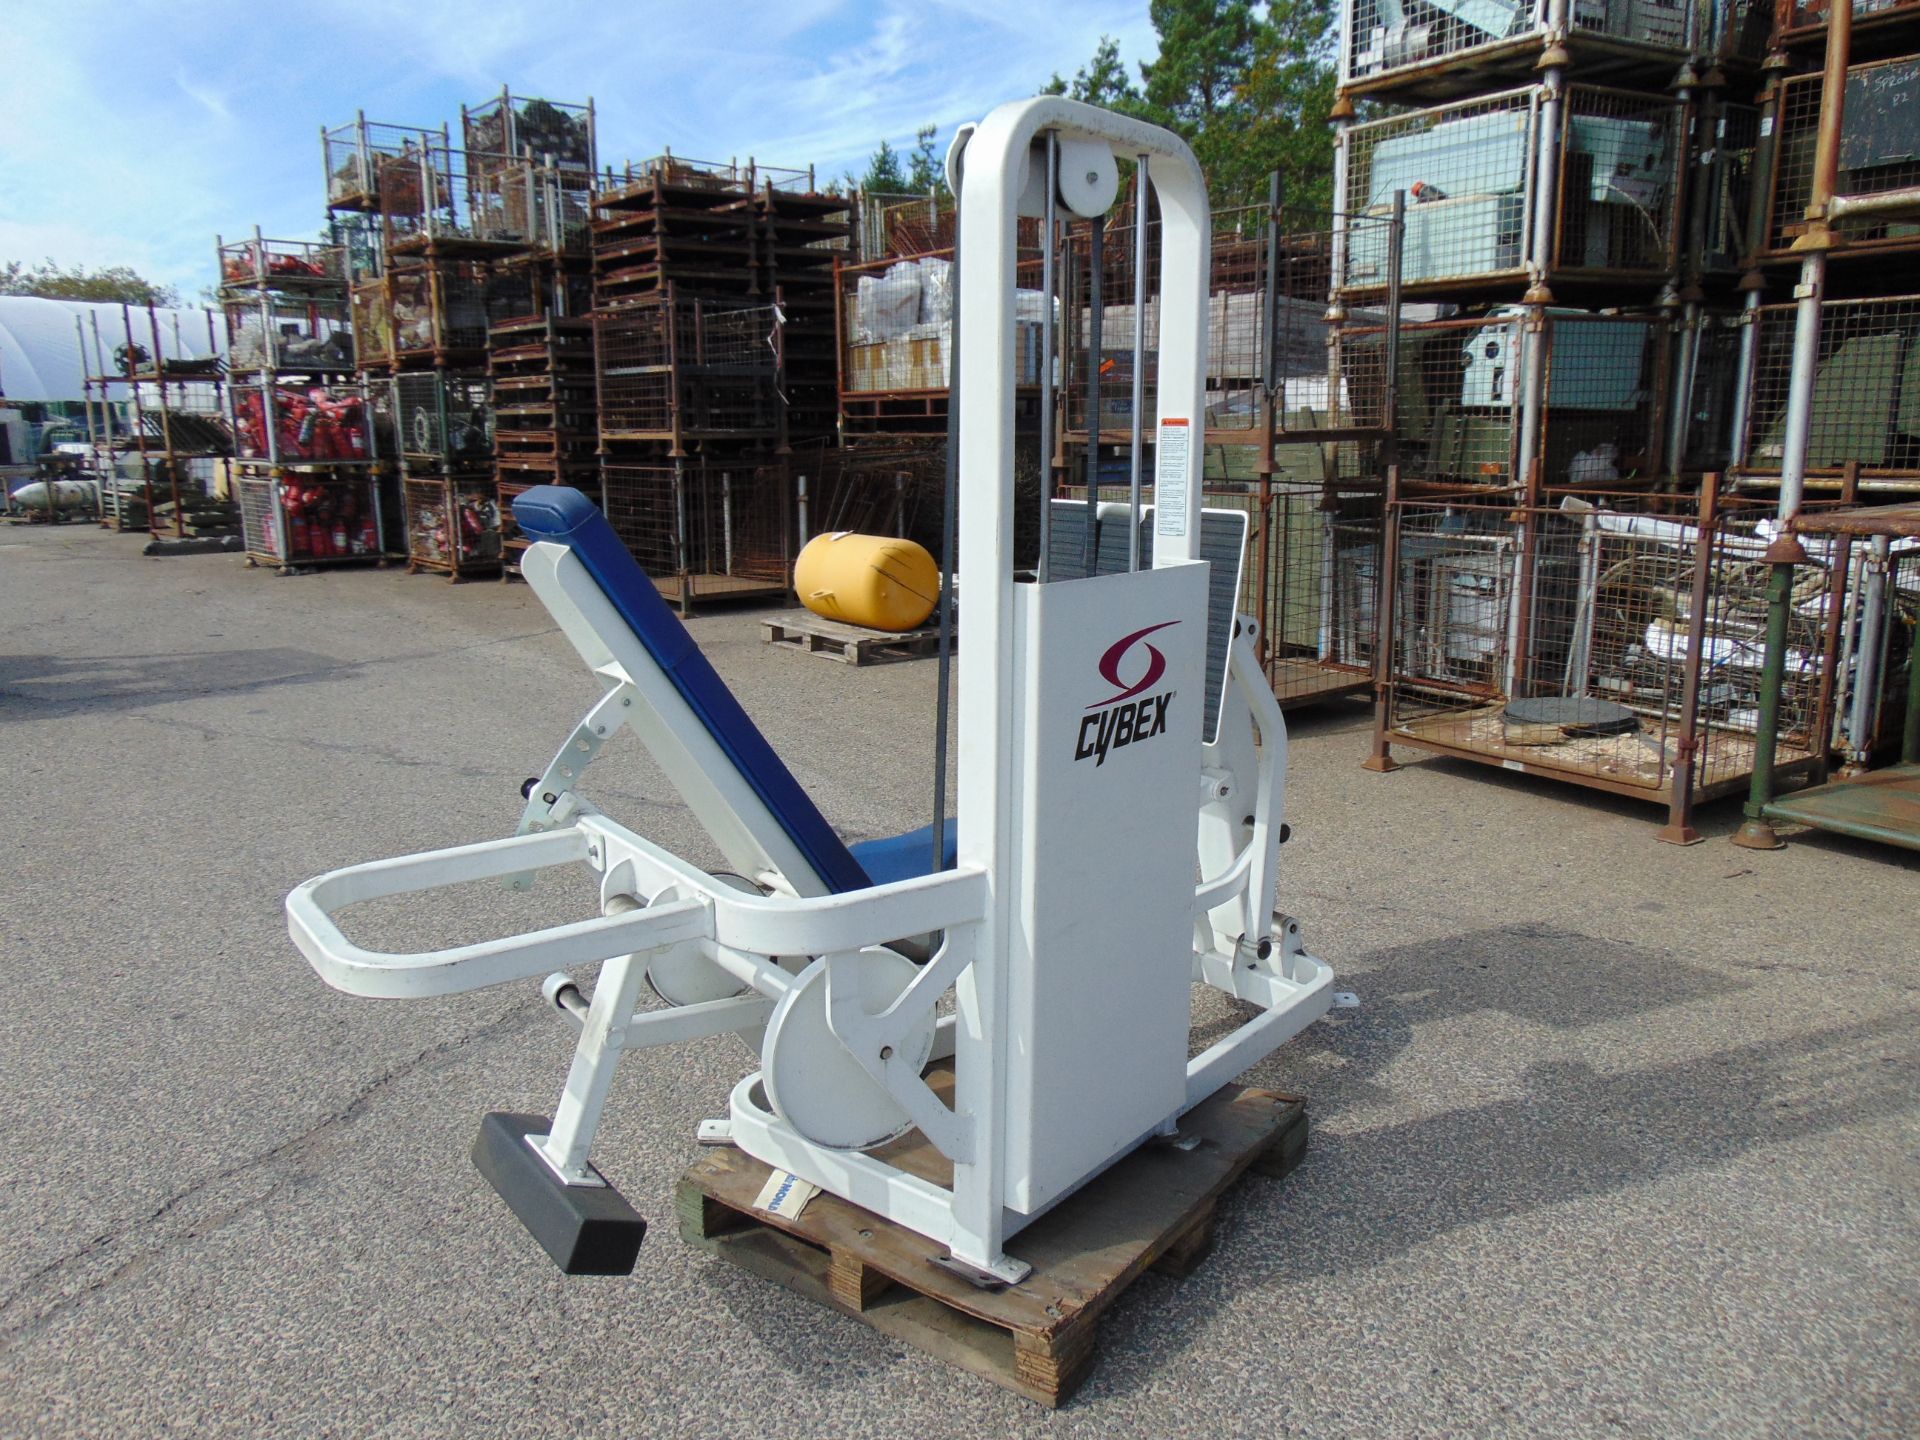 Cybex Seated Leg Press Exercise Machine - Image 4 of 10